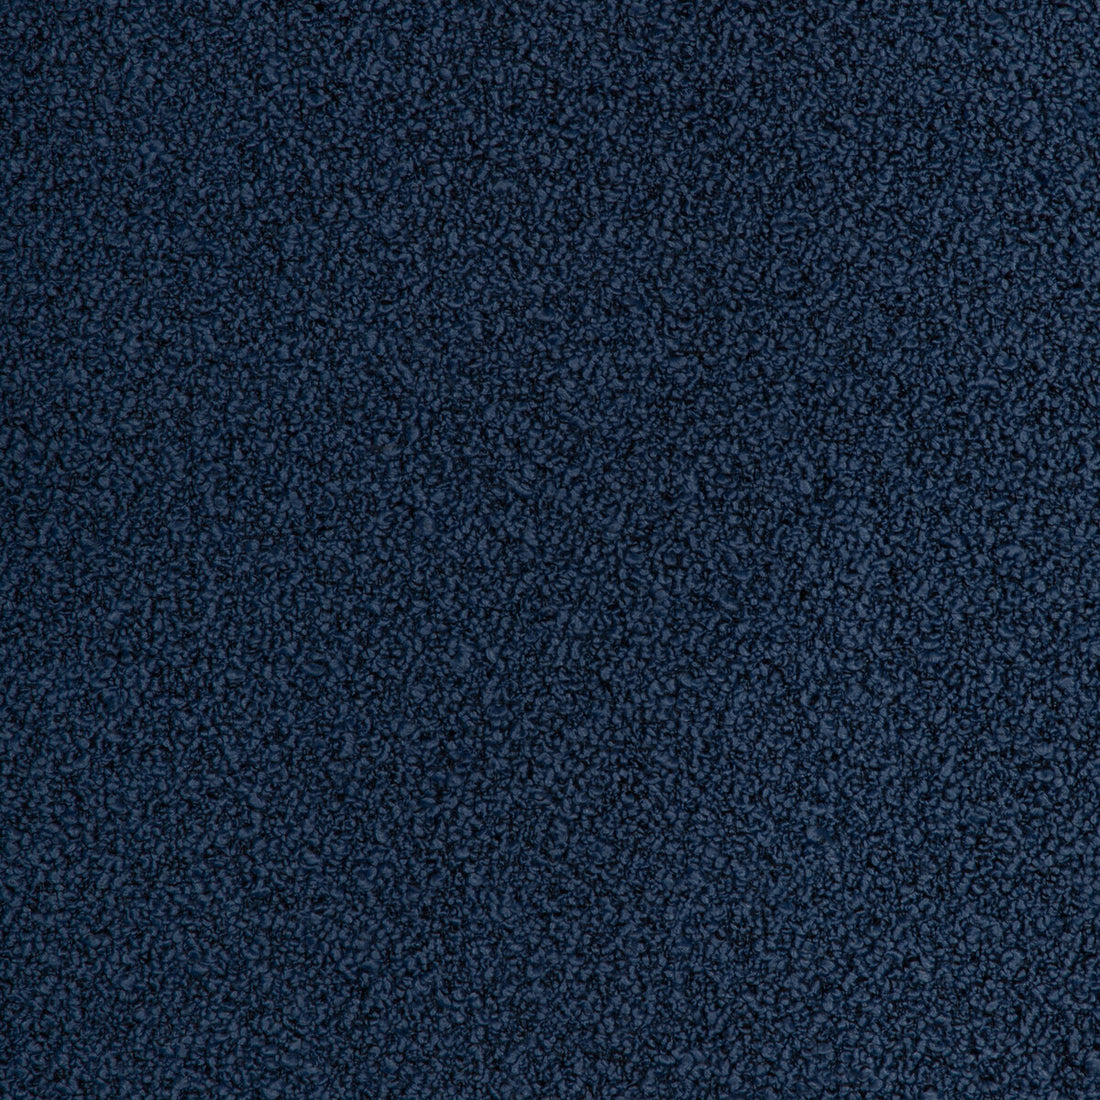 Kravet Smart fabric in 37093-505 color - pattern 37093.505.0 - by Kravet Smart